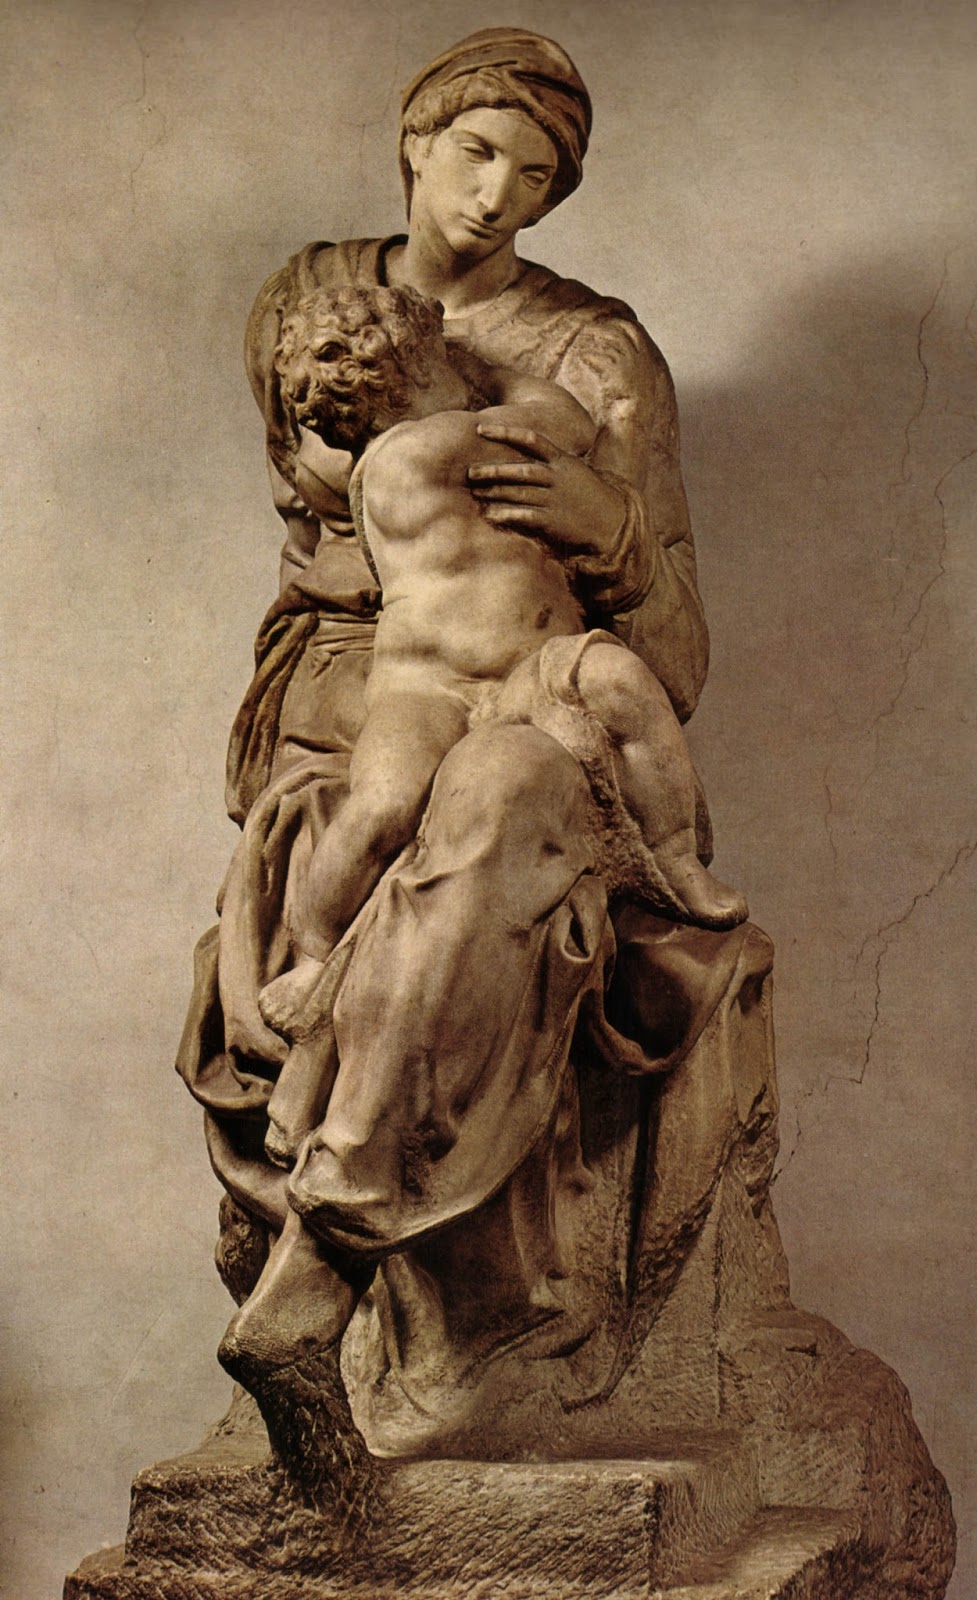 Michelangelo+Buonarroti-1475-1564 (340).jpg